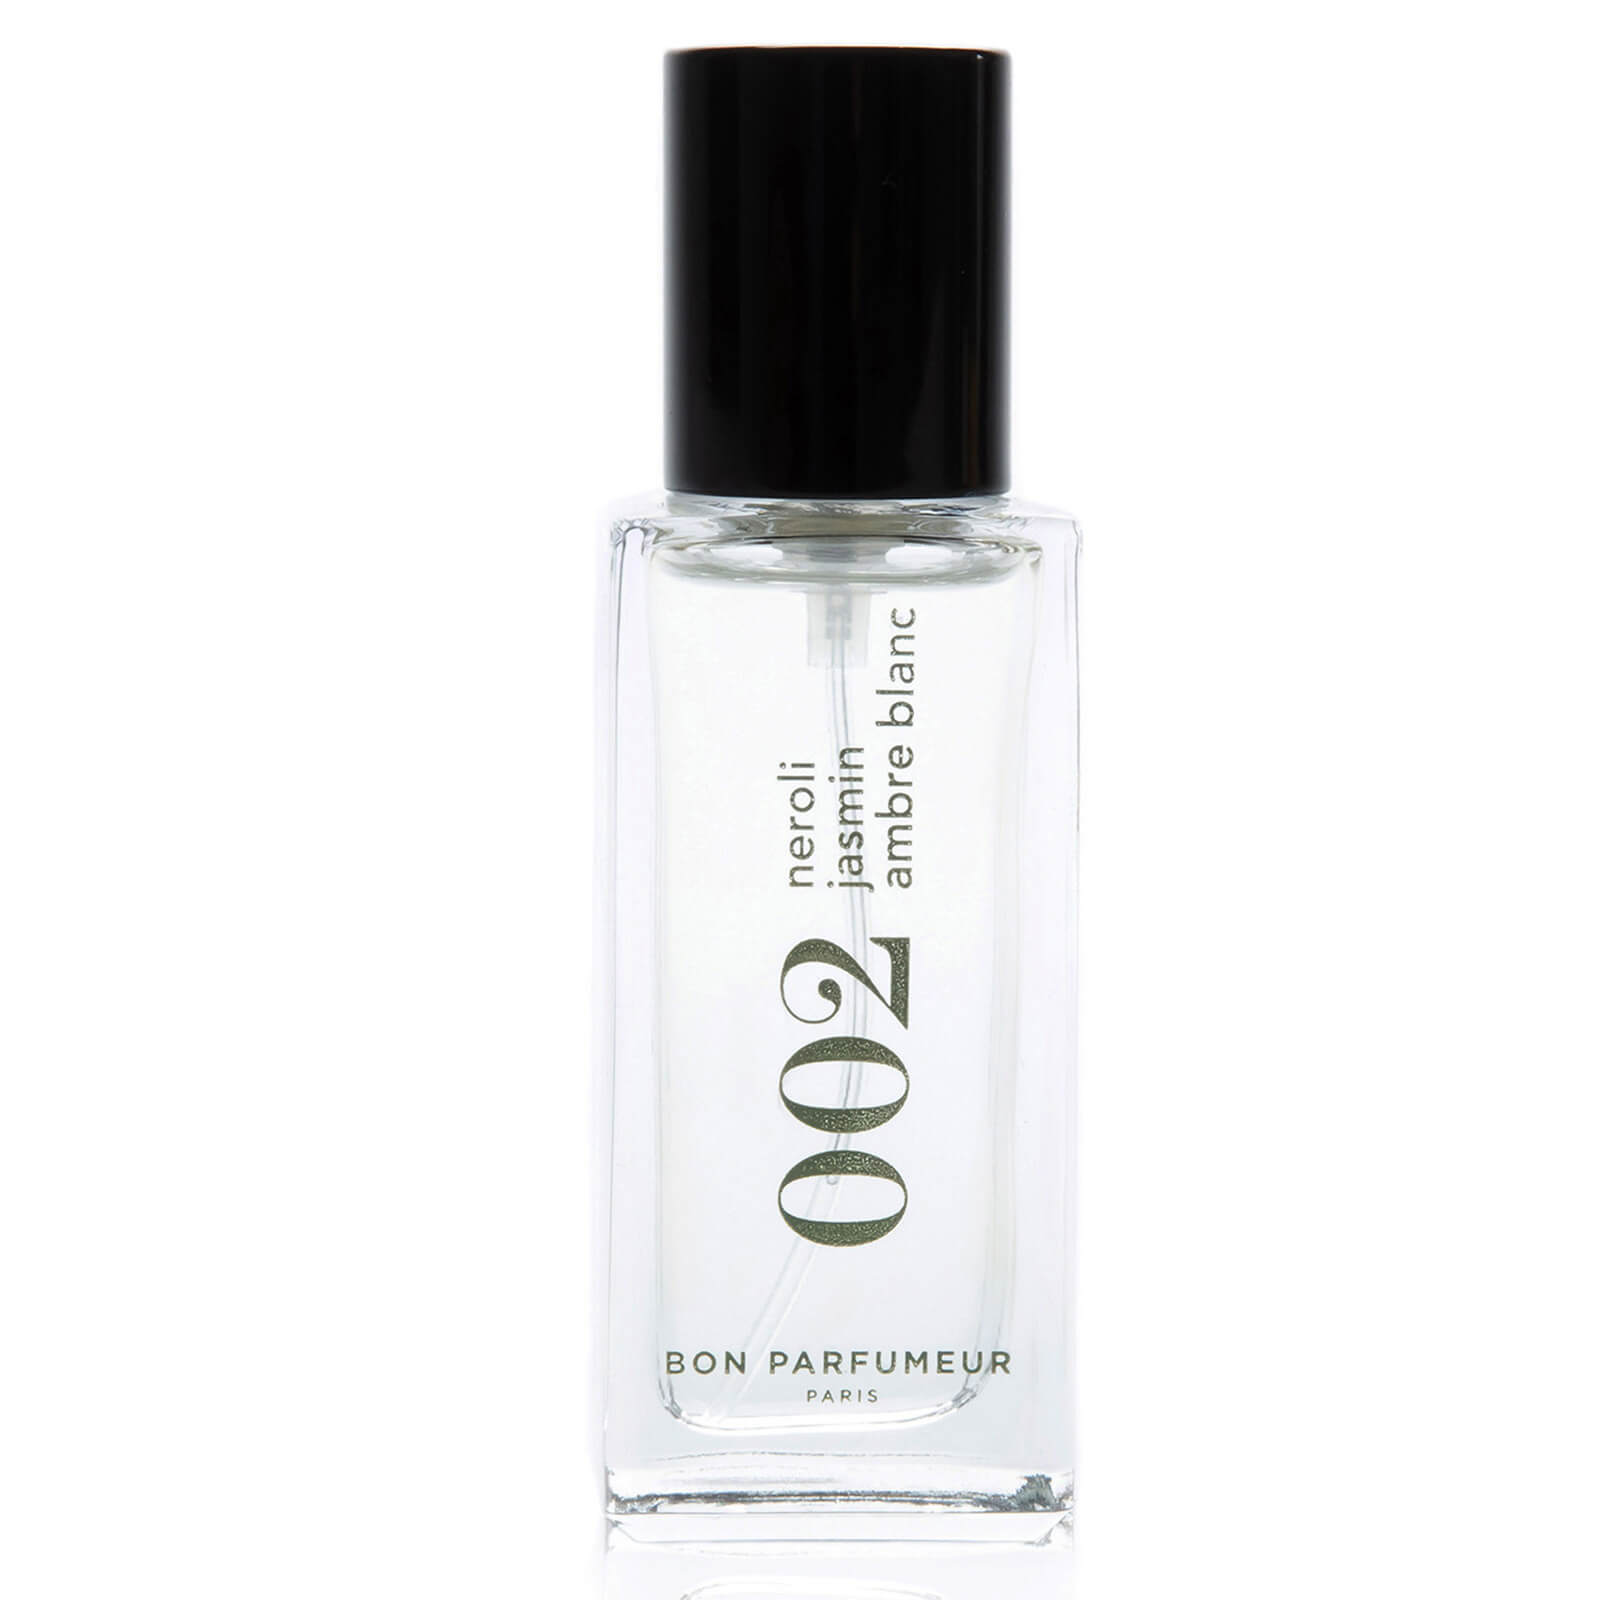 Bon Parfumeur 002 Neroli, Jasmine, White Amber Eau de Parfum (Various Sizes) - 15ml